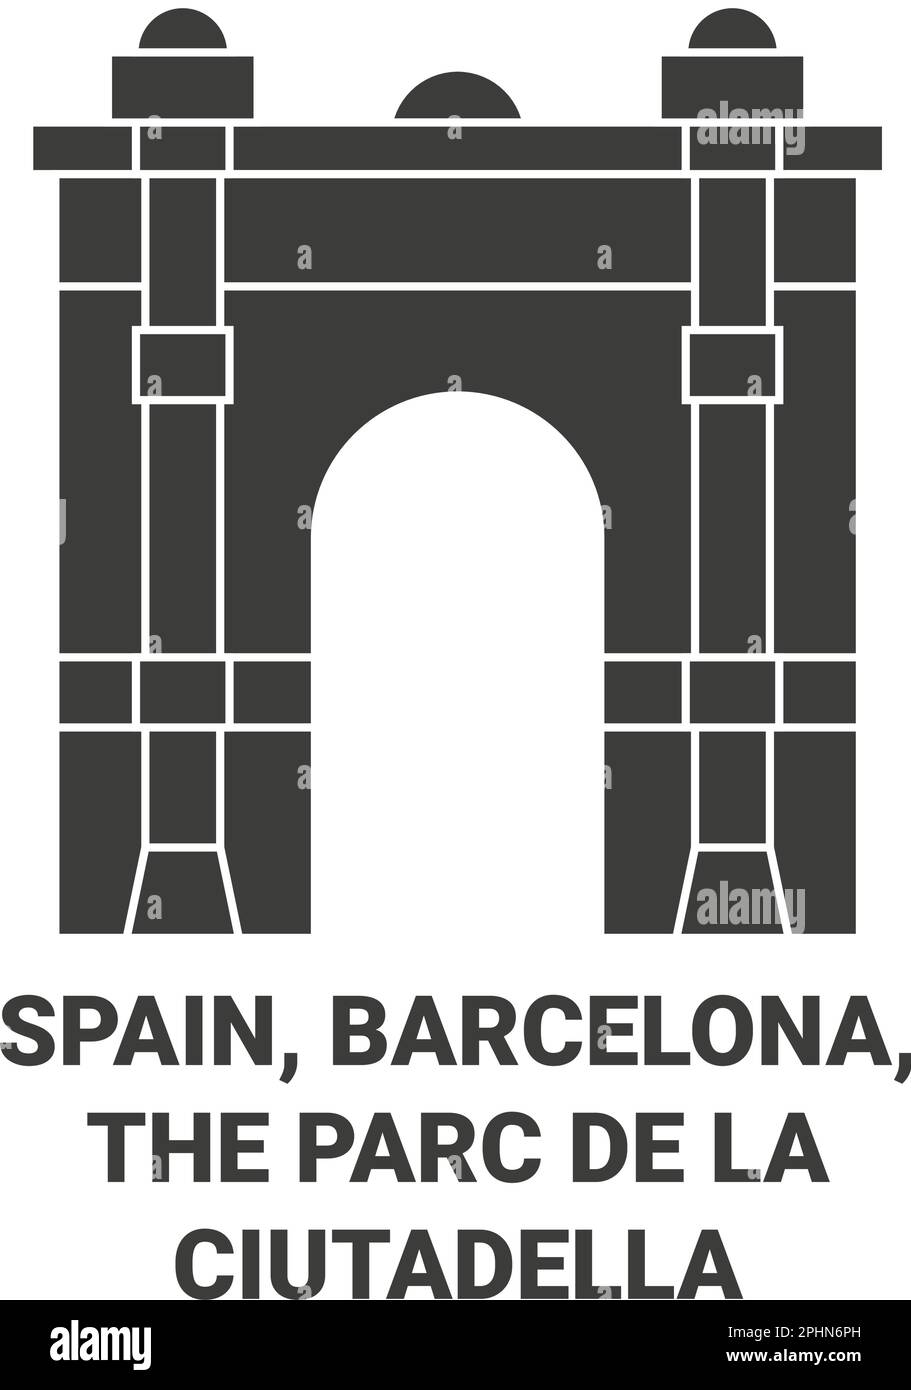 Spanien, Barcelona, der Parc de La Ciutadella reisen als Vektorbild Stock Vektor